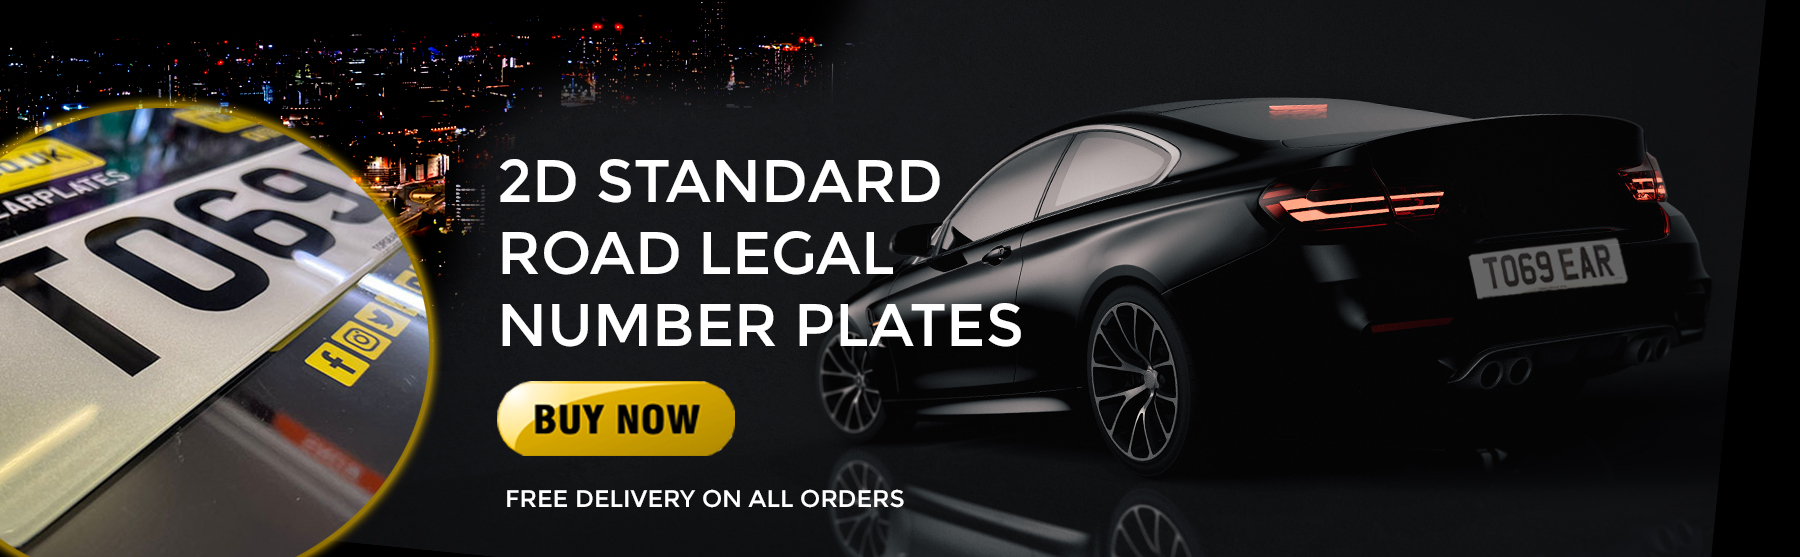 2d standard road legal number plates